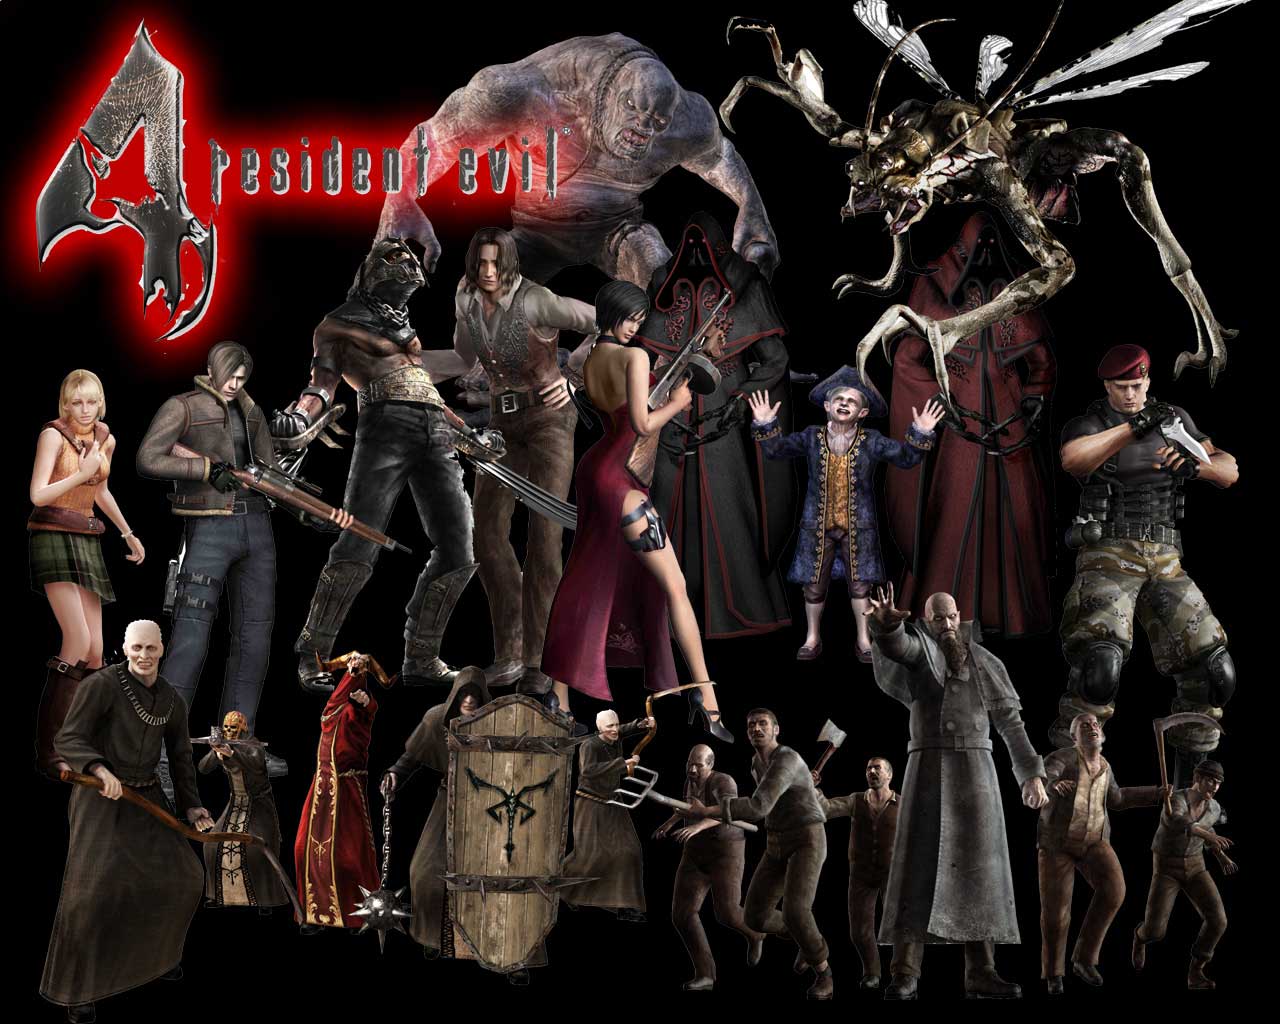 Resident Evil 4 [informacion, imágenes, música, wallpaper]!